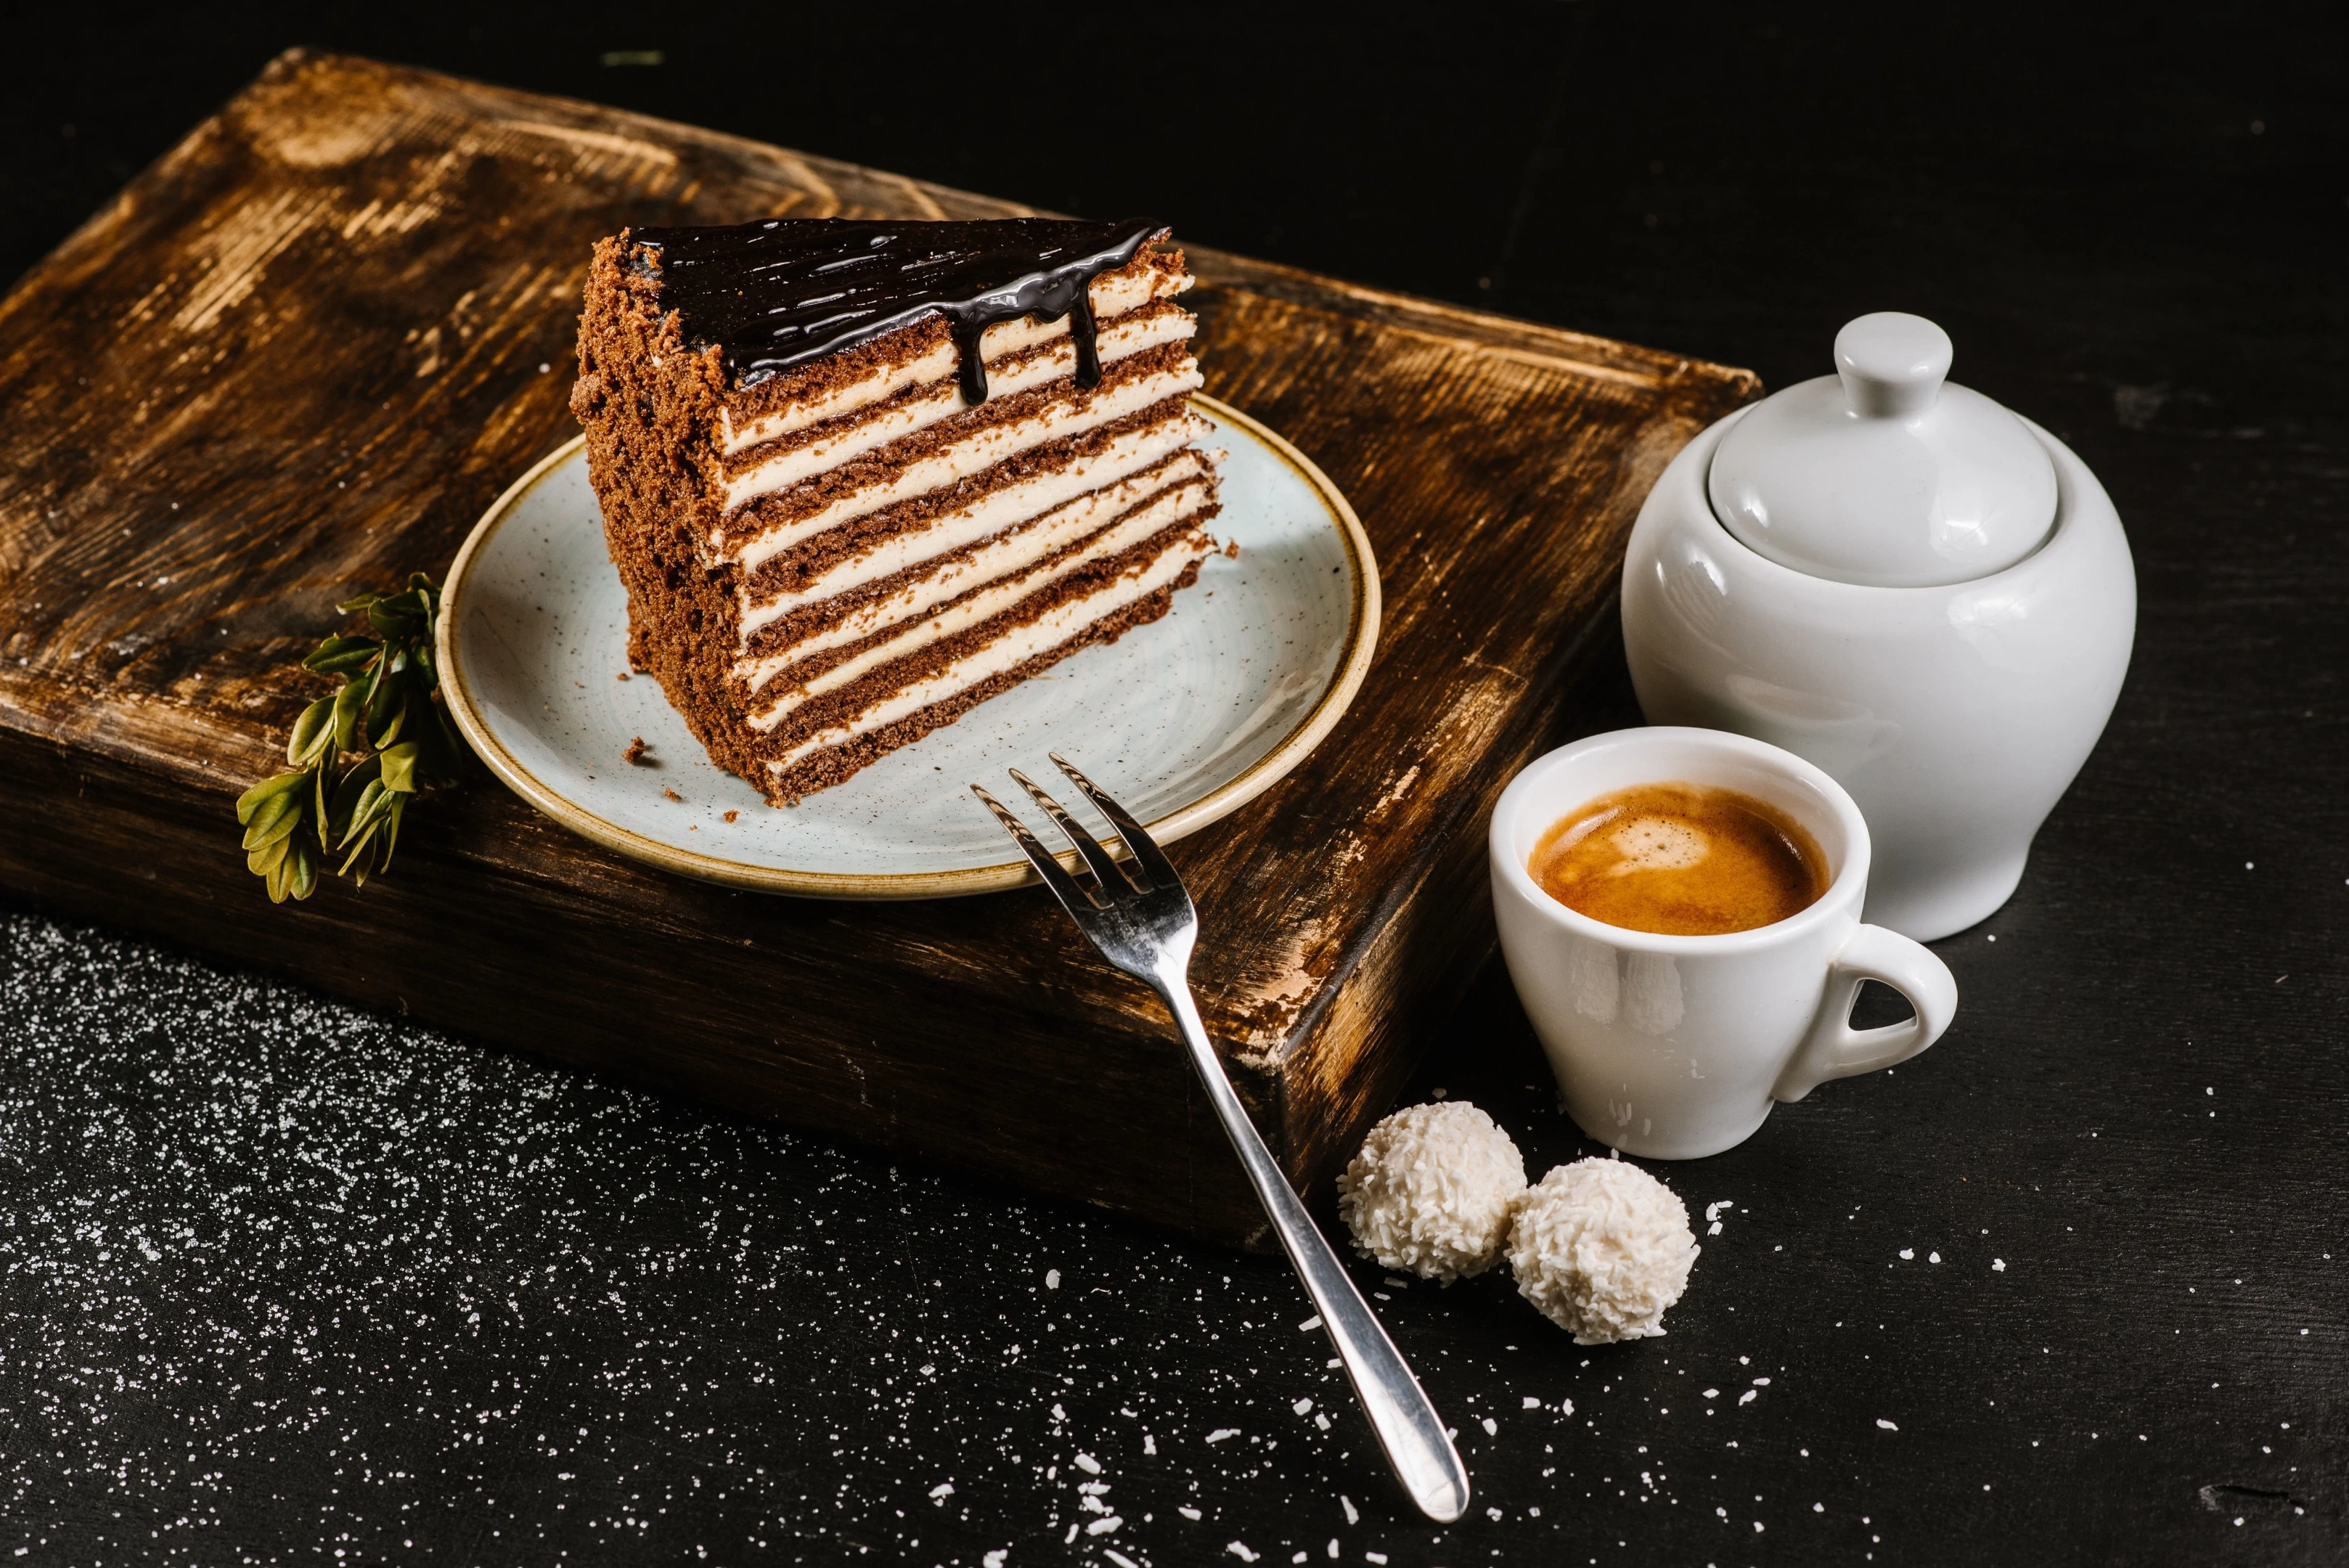 A piece of chocolate and cream cake with espresso